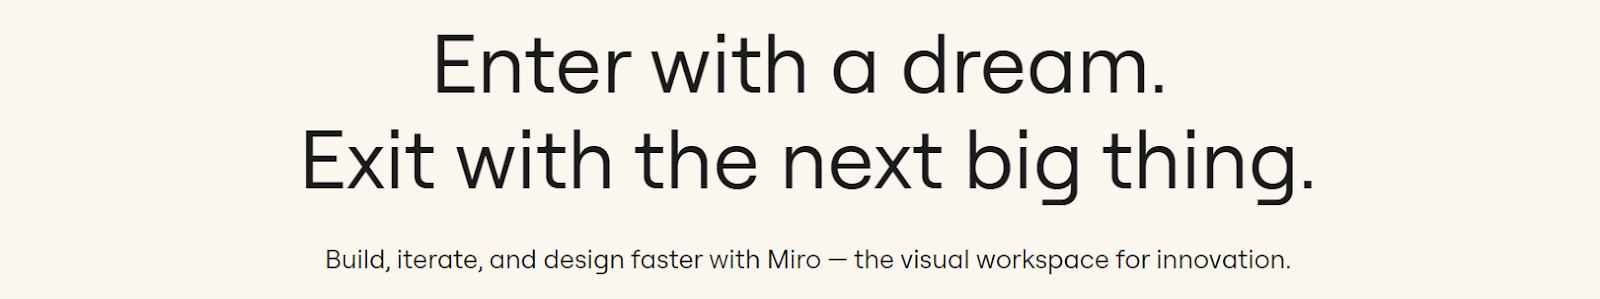 Image showing Miro as a workflow management platform